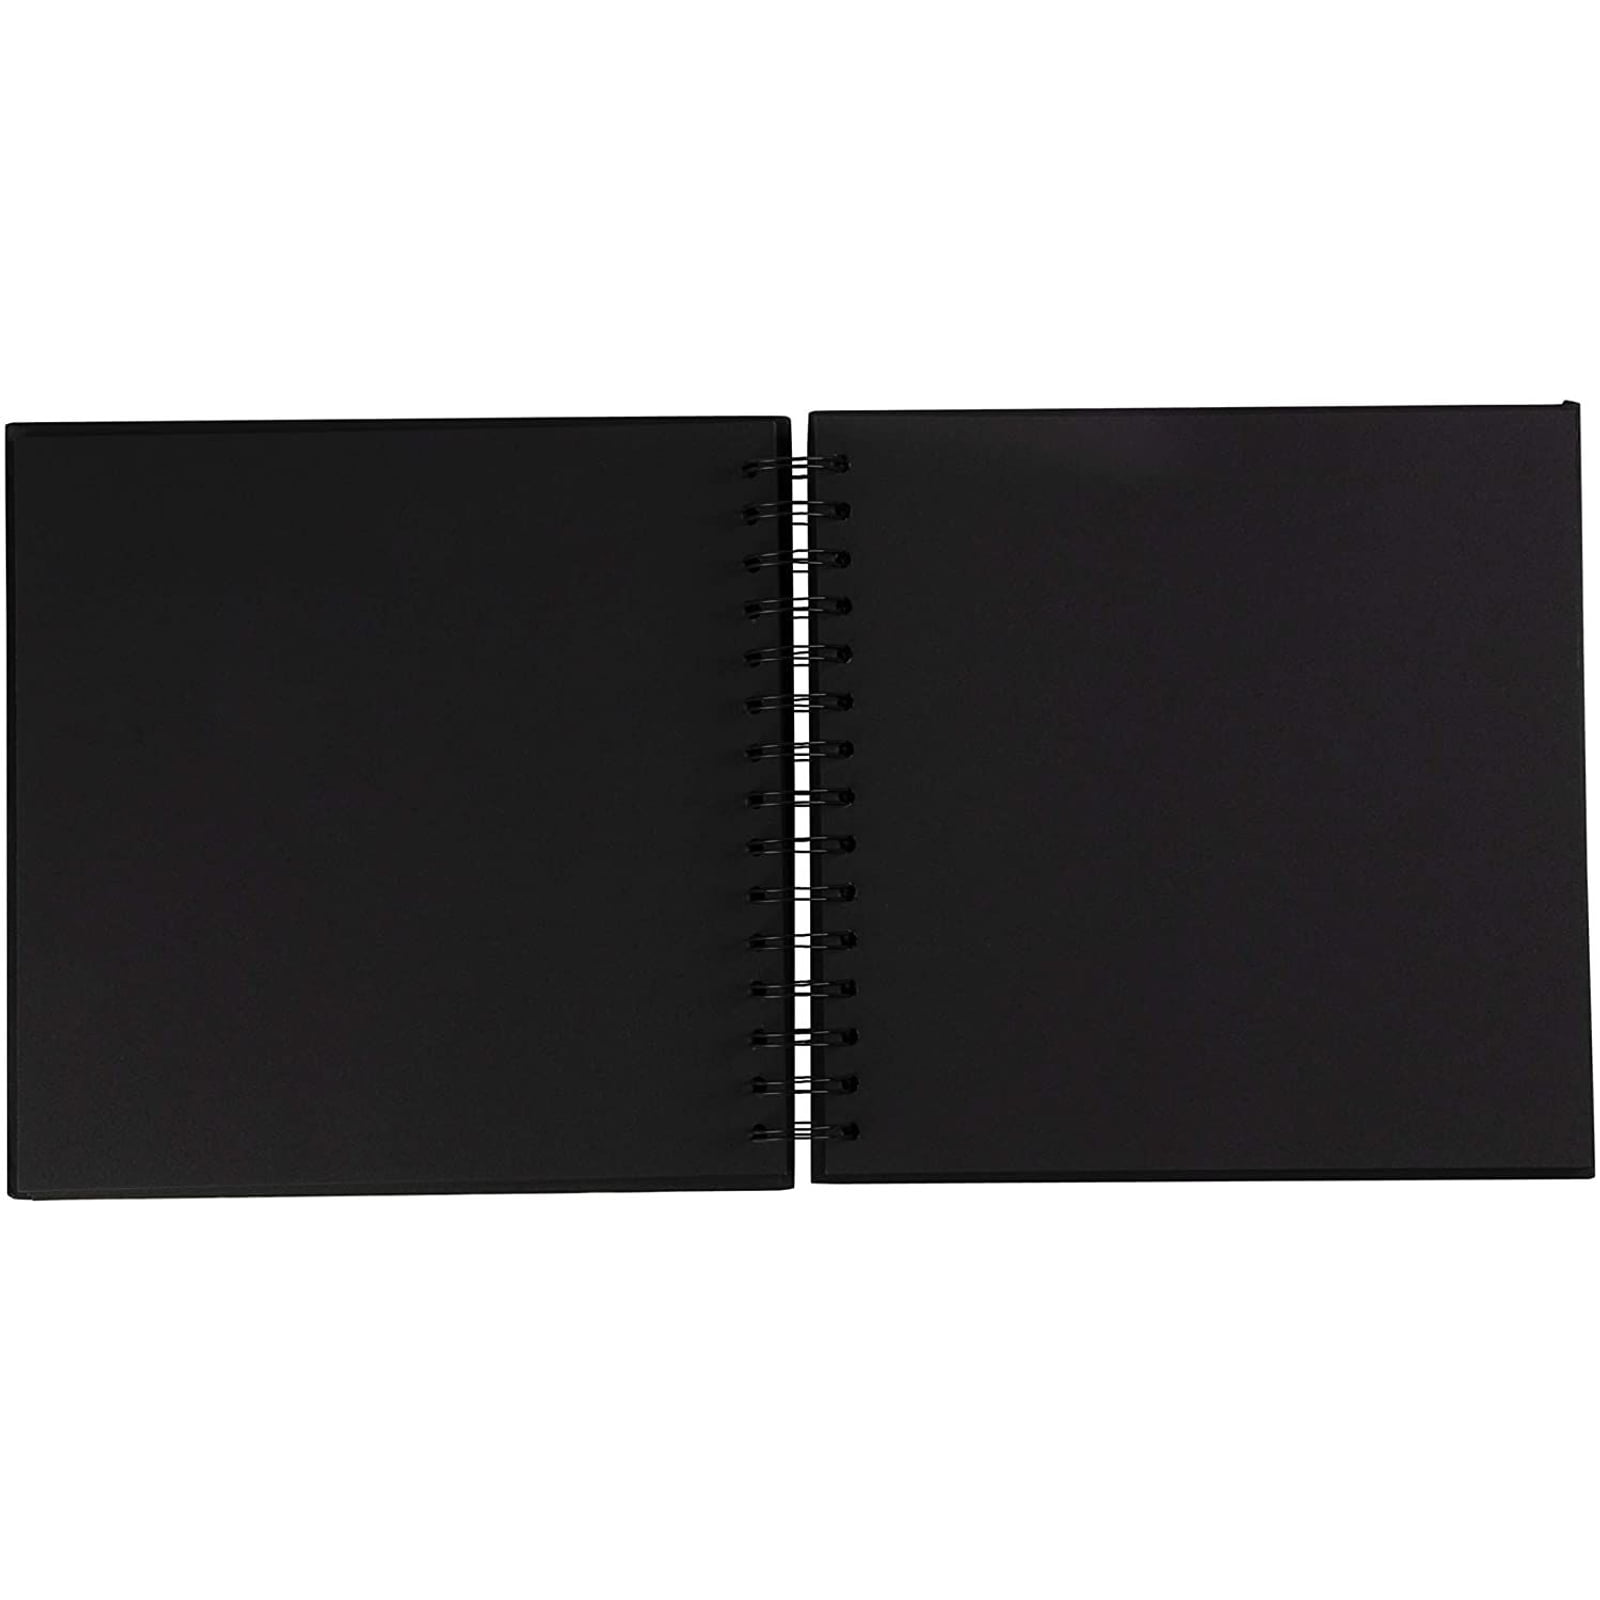 Jacquard Colorpad Waterproof Refill - Black - Scrapbooking Made Simple